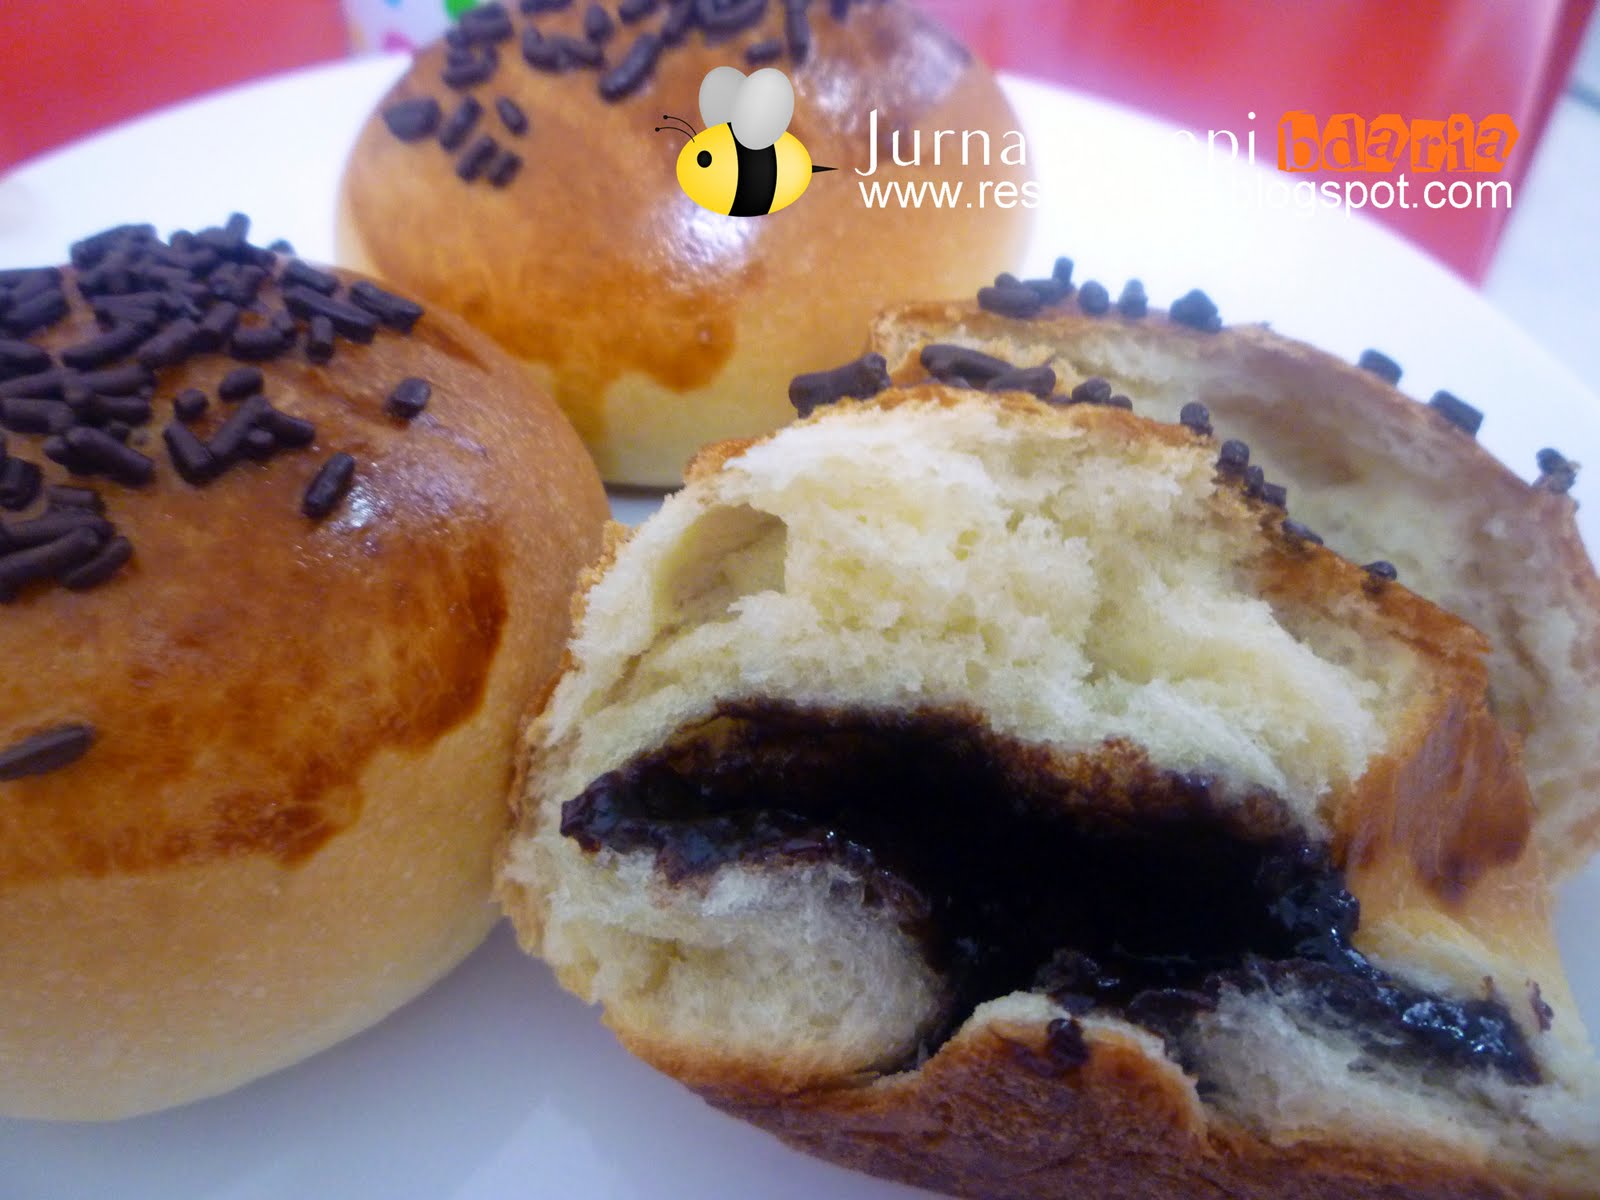 Resepi Roti Coklat Guna Bread Maker - copd blog q